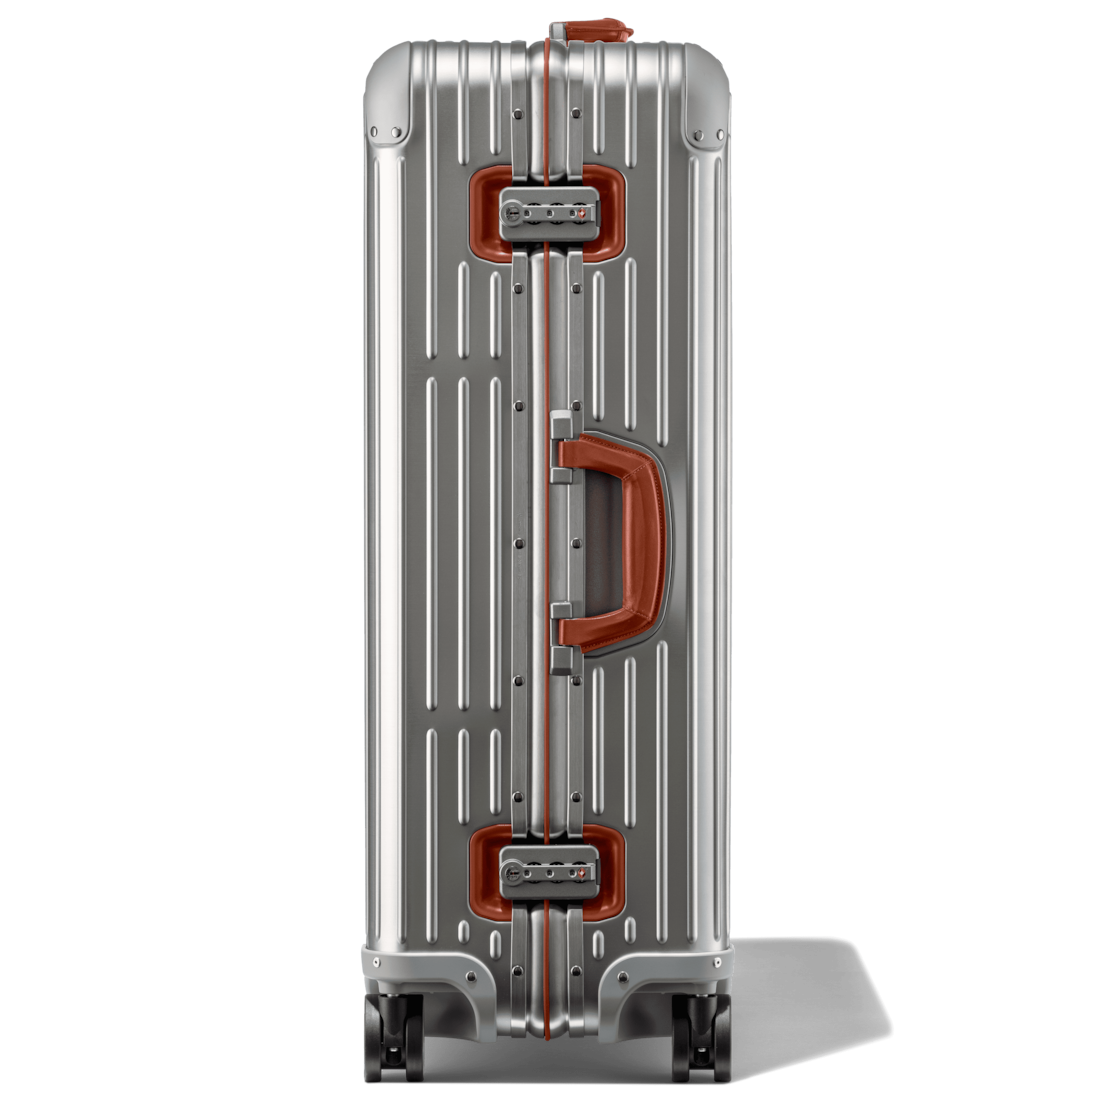 RIMOWA Original Cabin Twist Suitcase for Men